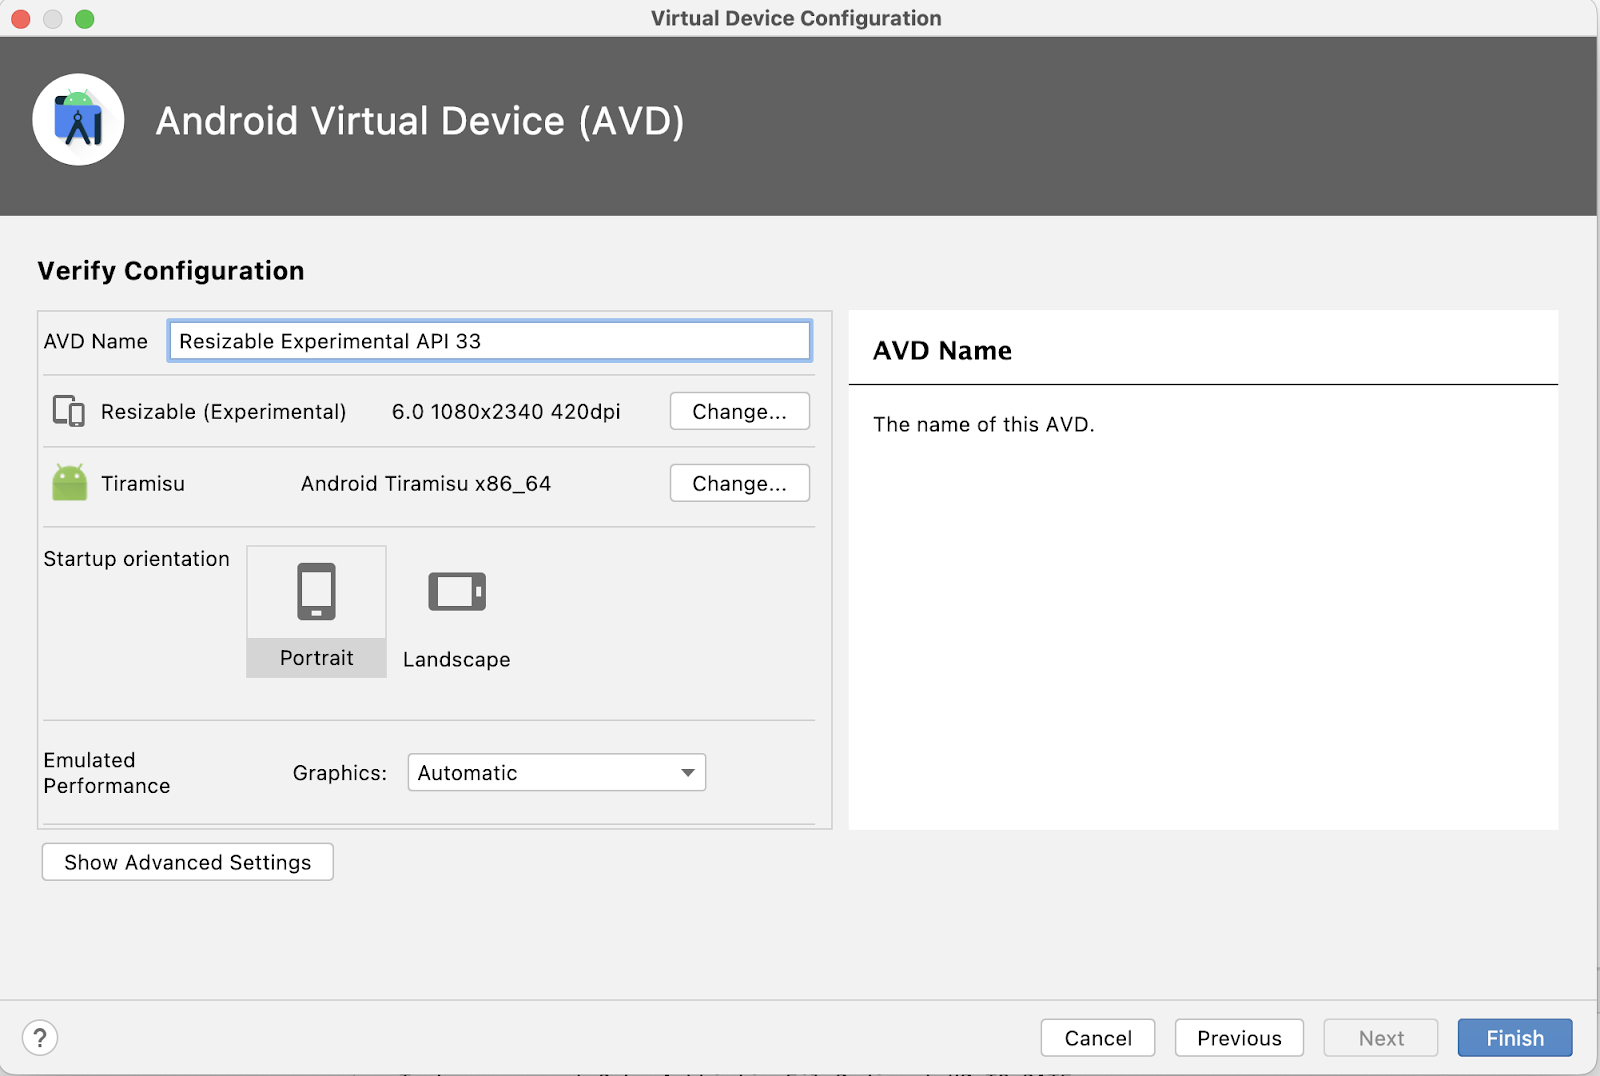 Android 虛擬裝置 (AVD) 中的「Virtual Configation」畫面即會顯示。設定畫面包含輸入 AVD 名稱使用的文字欄位。名稱欄位下方會列出裝置選項，包括裝置定義 (可調整大小，實驗功能)、系統映像檔 (Tiramisu) 和螢幕方向 (預設選取的螢幕方向為直向)。「Change」按鈕會顯示在裝置定義和系統映像檔資訊的右側，「Landscape」選項則位於所選「Portrait」選項的右側。右下角有 4 個按鈕：「Cancel」、「Previous」、「Next」(顯示為灰色且無法選取) 和「Finish」。